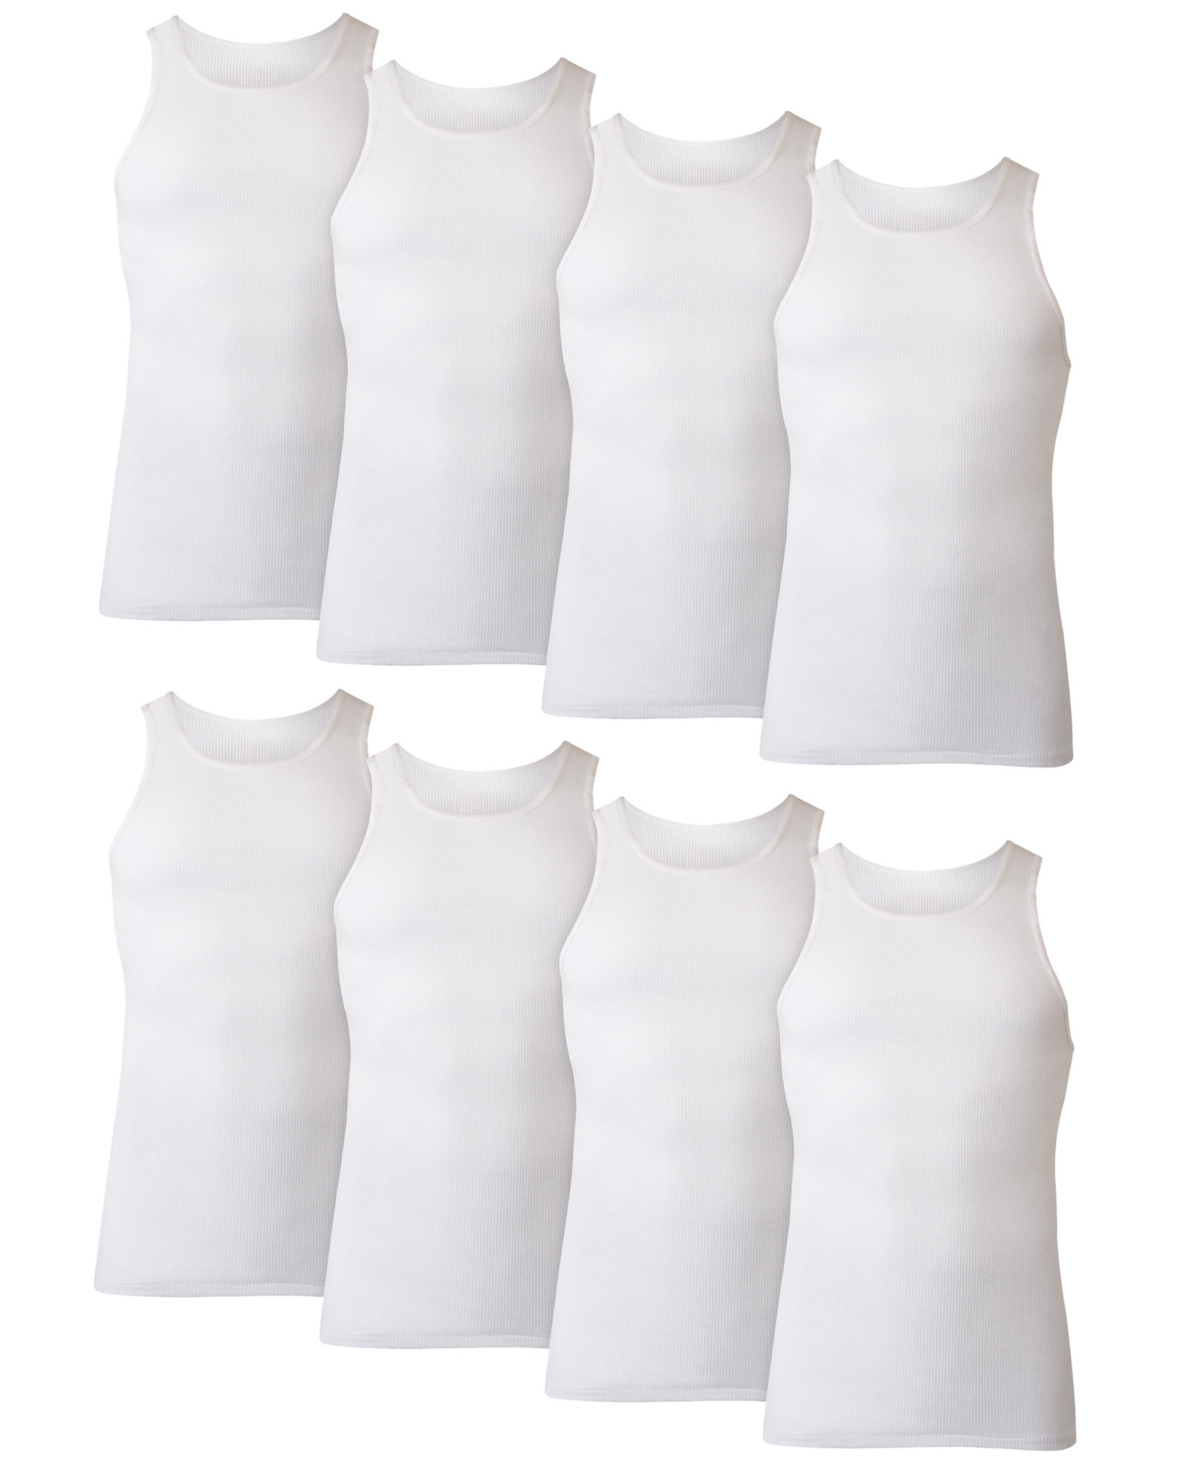 Shop Hanes Men's Cotton Comfortsoft Tank Top 7+1 Free Undershirts In Assorted